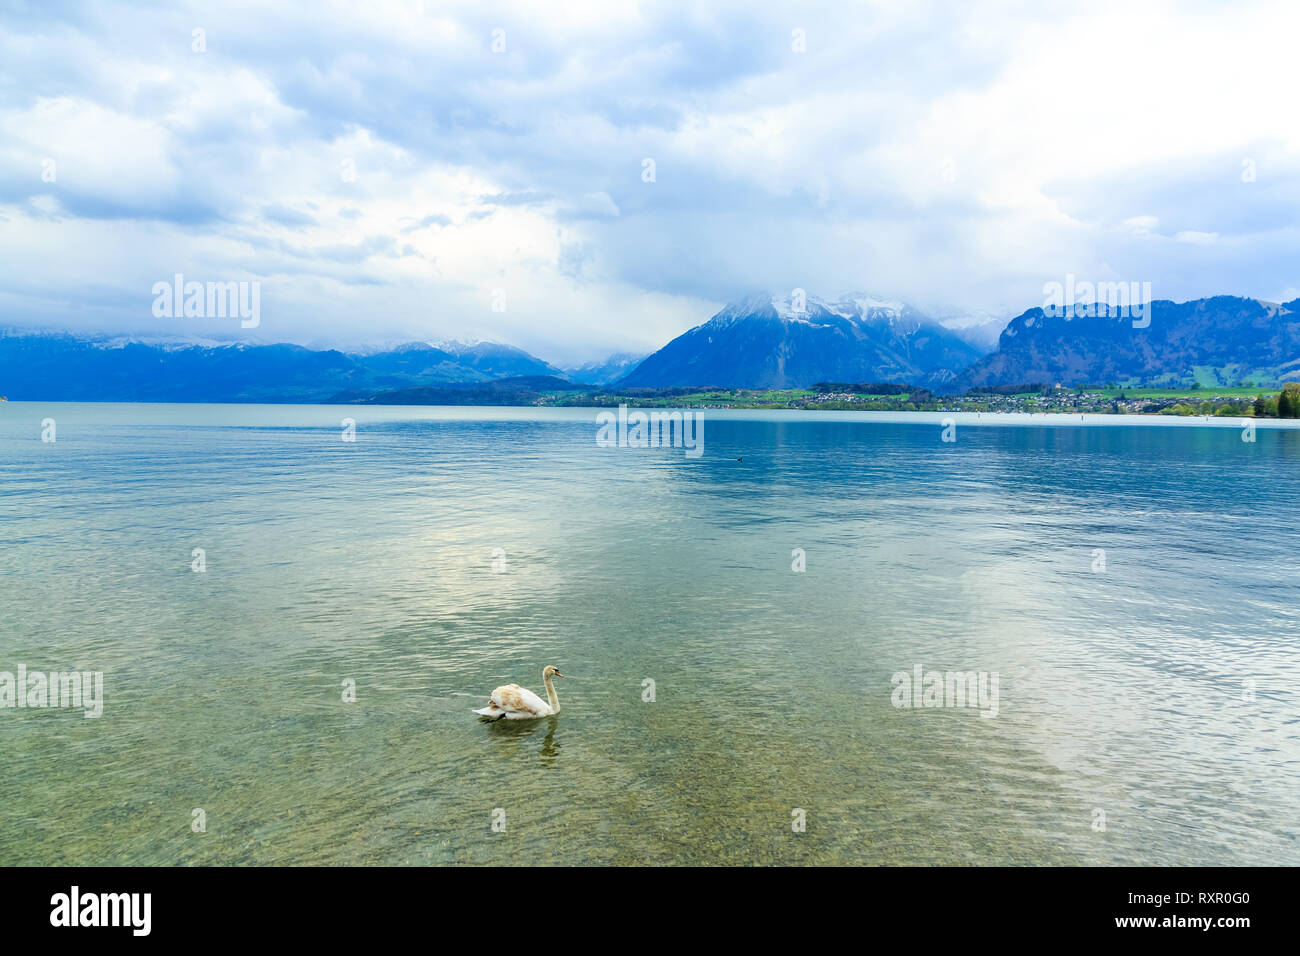 Lake Thun and Alps Mountains in the city of Thun, Switzerland Stock Photo